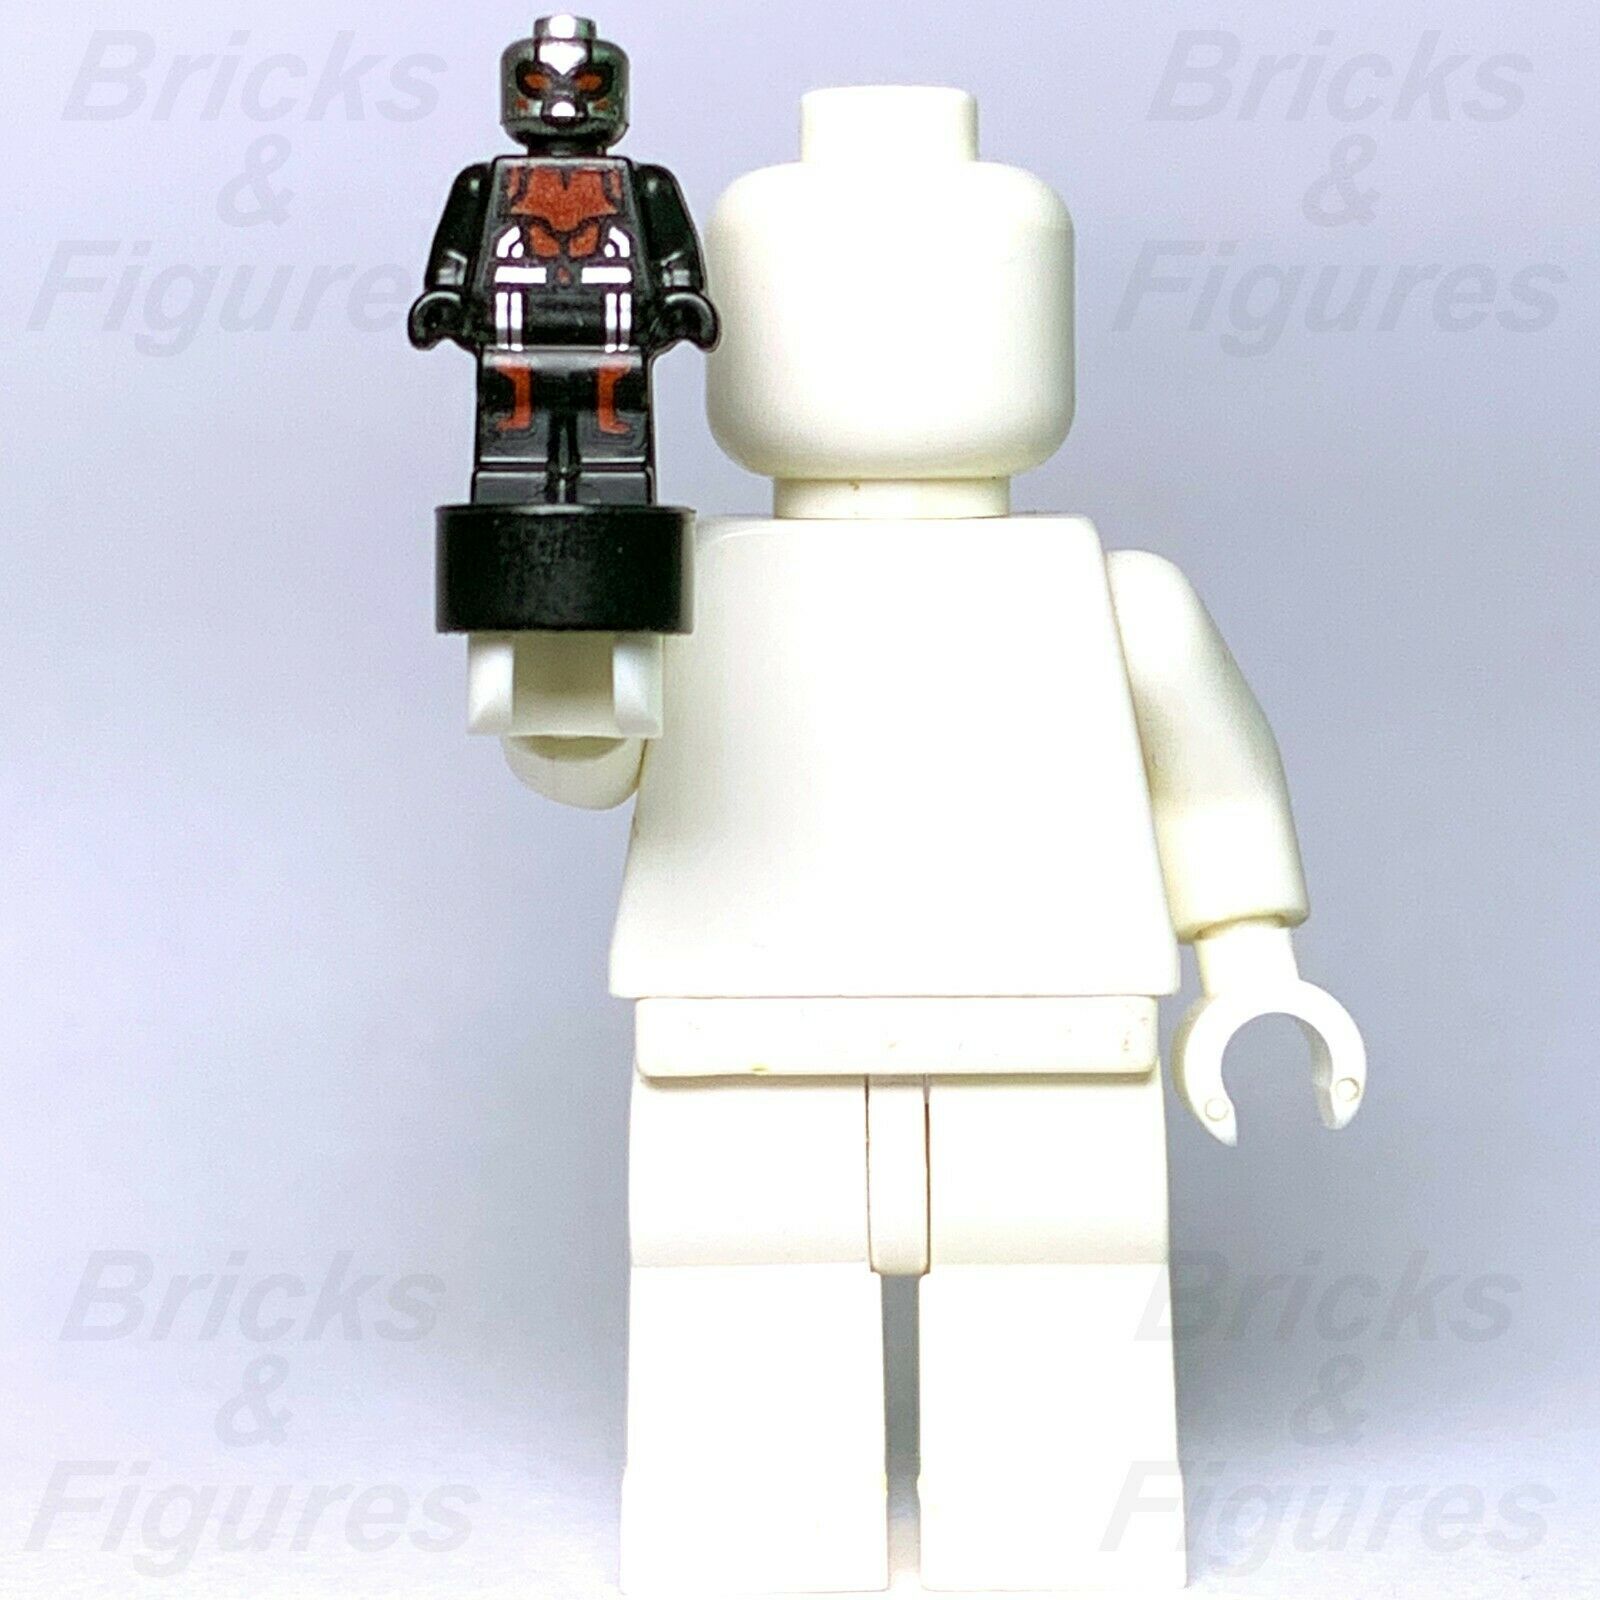 Marvel Super Heroes LEGO "Mini" Ant-Man Small 76051 Captain America Civil War - Bricks & Figures